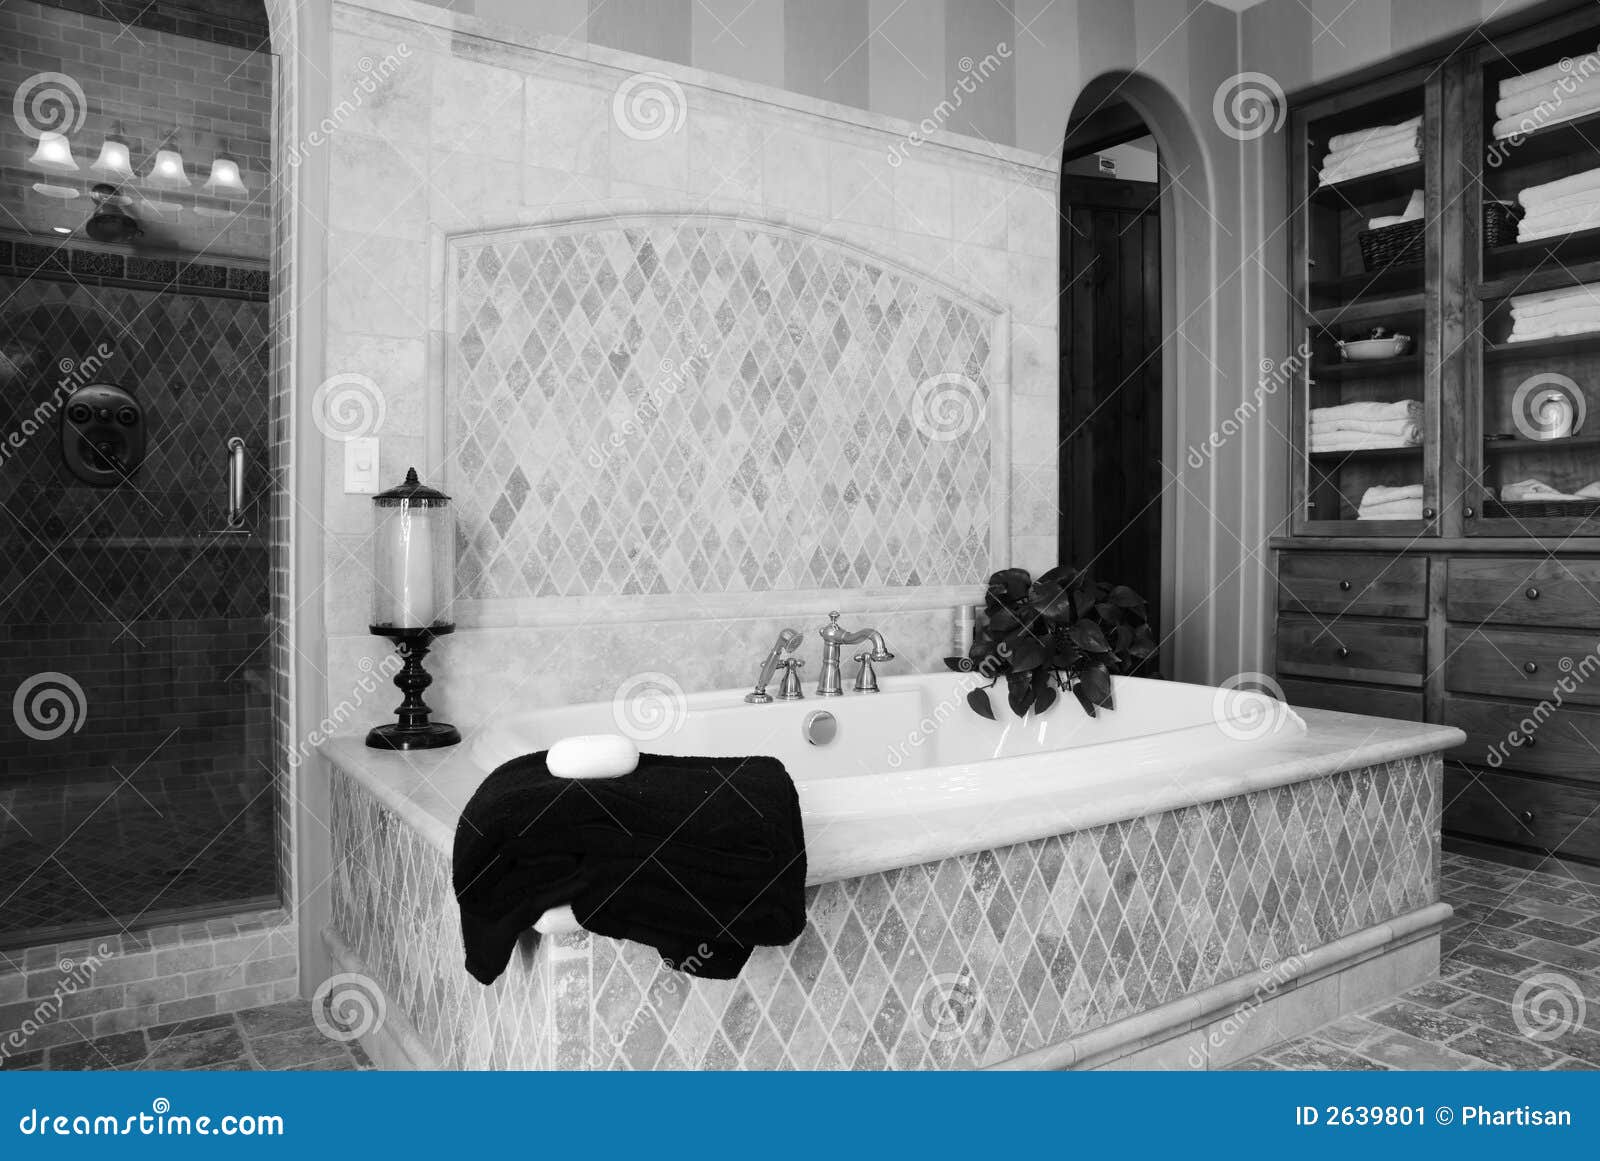 Luxury Ornate Bathroom Stock Image Image Of Shower Expensive